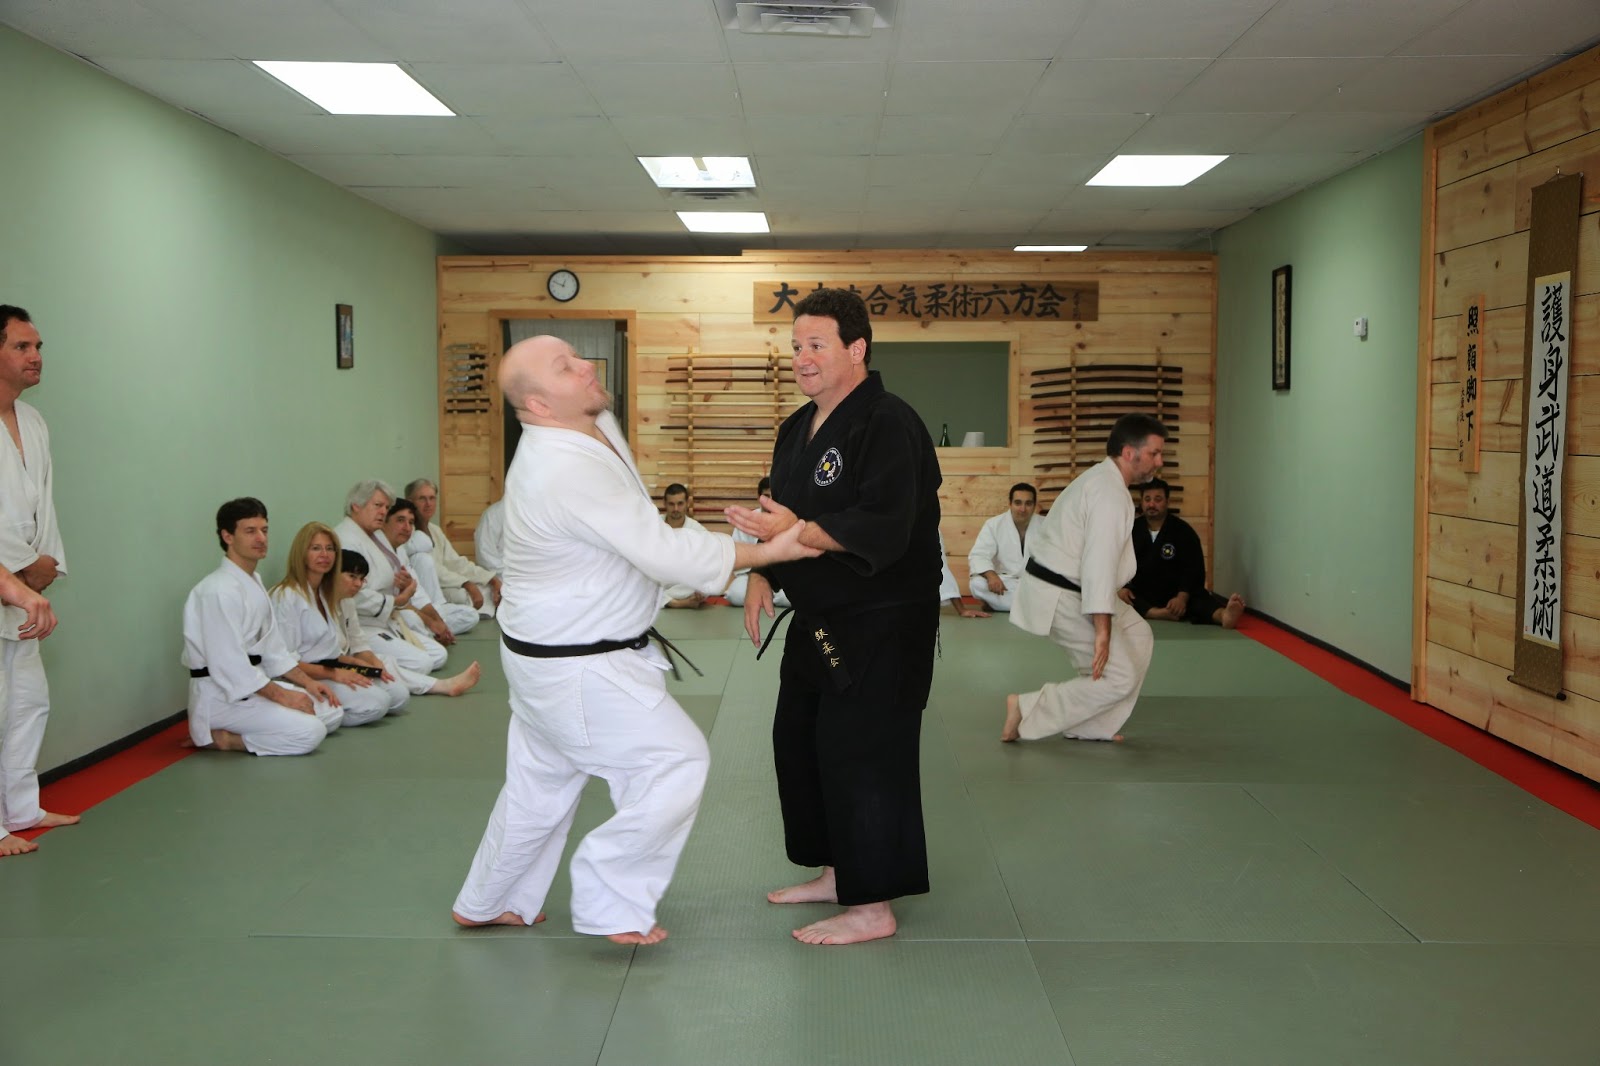 Photo of Popkin-Brogna Jujitsu Center in West Hempstead City, New York, United States - 4 Picture of Point of interest, Establishment, Health, Gym